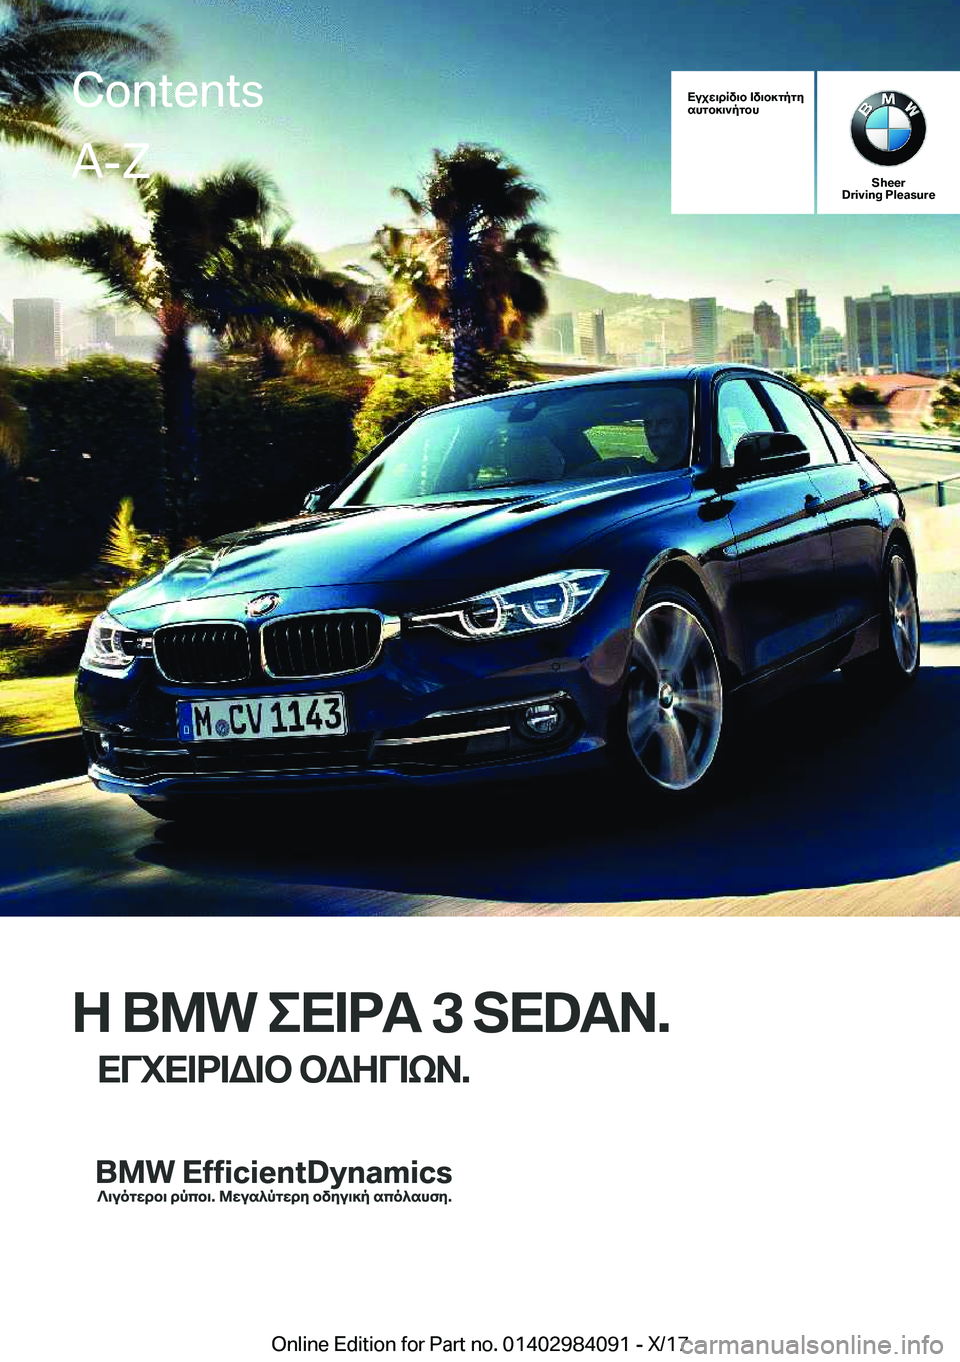 BMW 3 SERIES 2018  ΟΔΗΓΌΣ ΧΡΉΣΗΣ (in Greek) Xujw\dRv\b�=v\b]gpgy
shgb]\`pgbh
�S�h�e�e�r
�D�r�i�v�i�n�g��P�l�e�a�s�u�r�e
;��B�M�W�eX=dT��3��S�E�D�A�N�.
XViX=d=W=b�bW;V=kA�.
�C�o�n�t�e�n